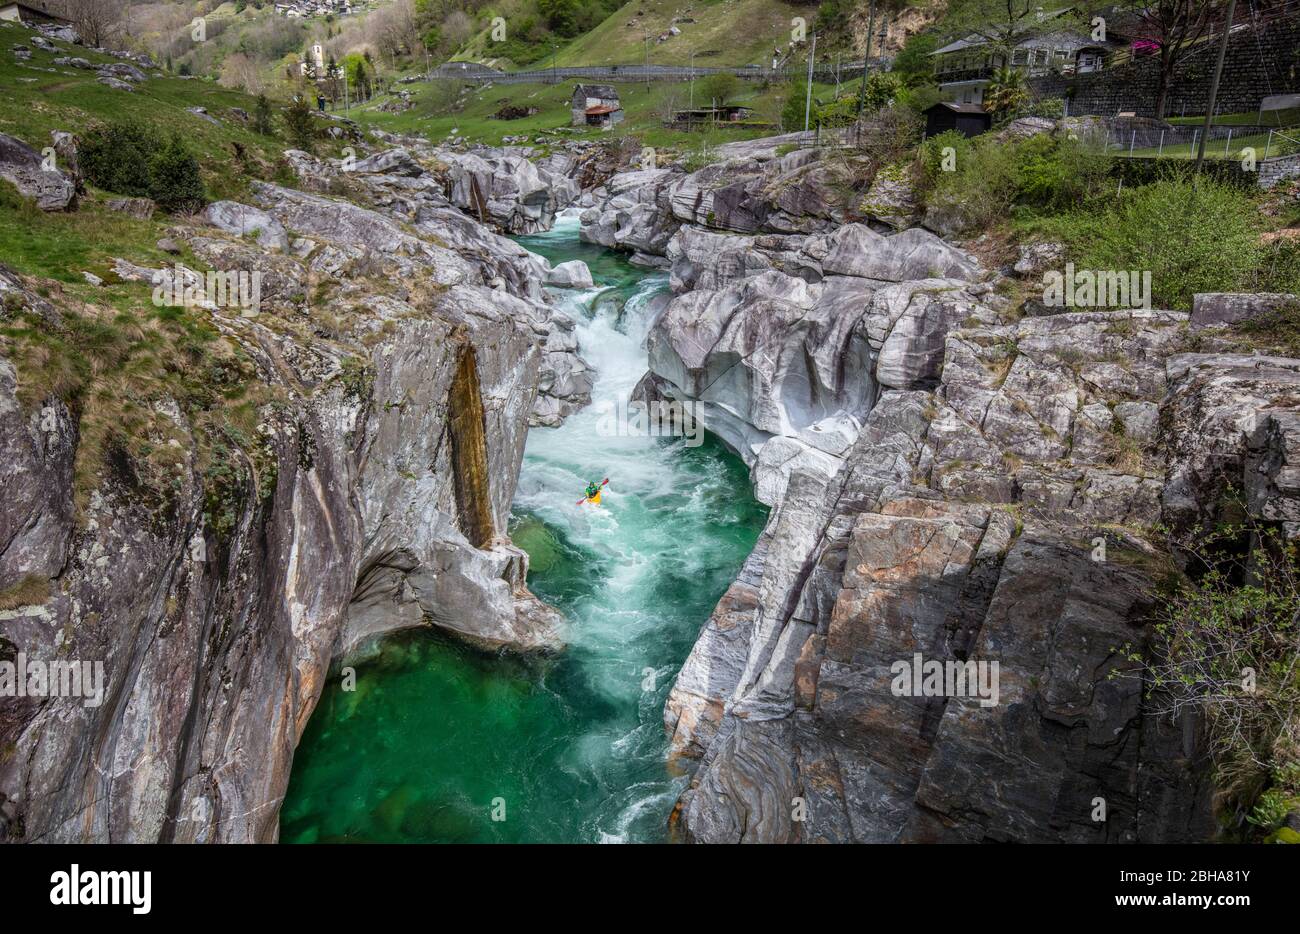 Switzerland, Alps, Ticino, Locarno, Verzasca Valley, Verzasca, canoe, canoeists, green water, whitewater, rapids, high smooth rocks Stock Photo